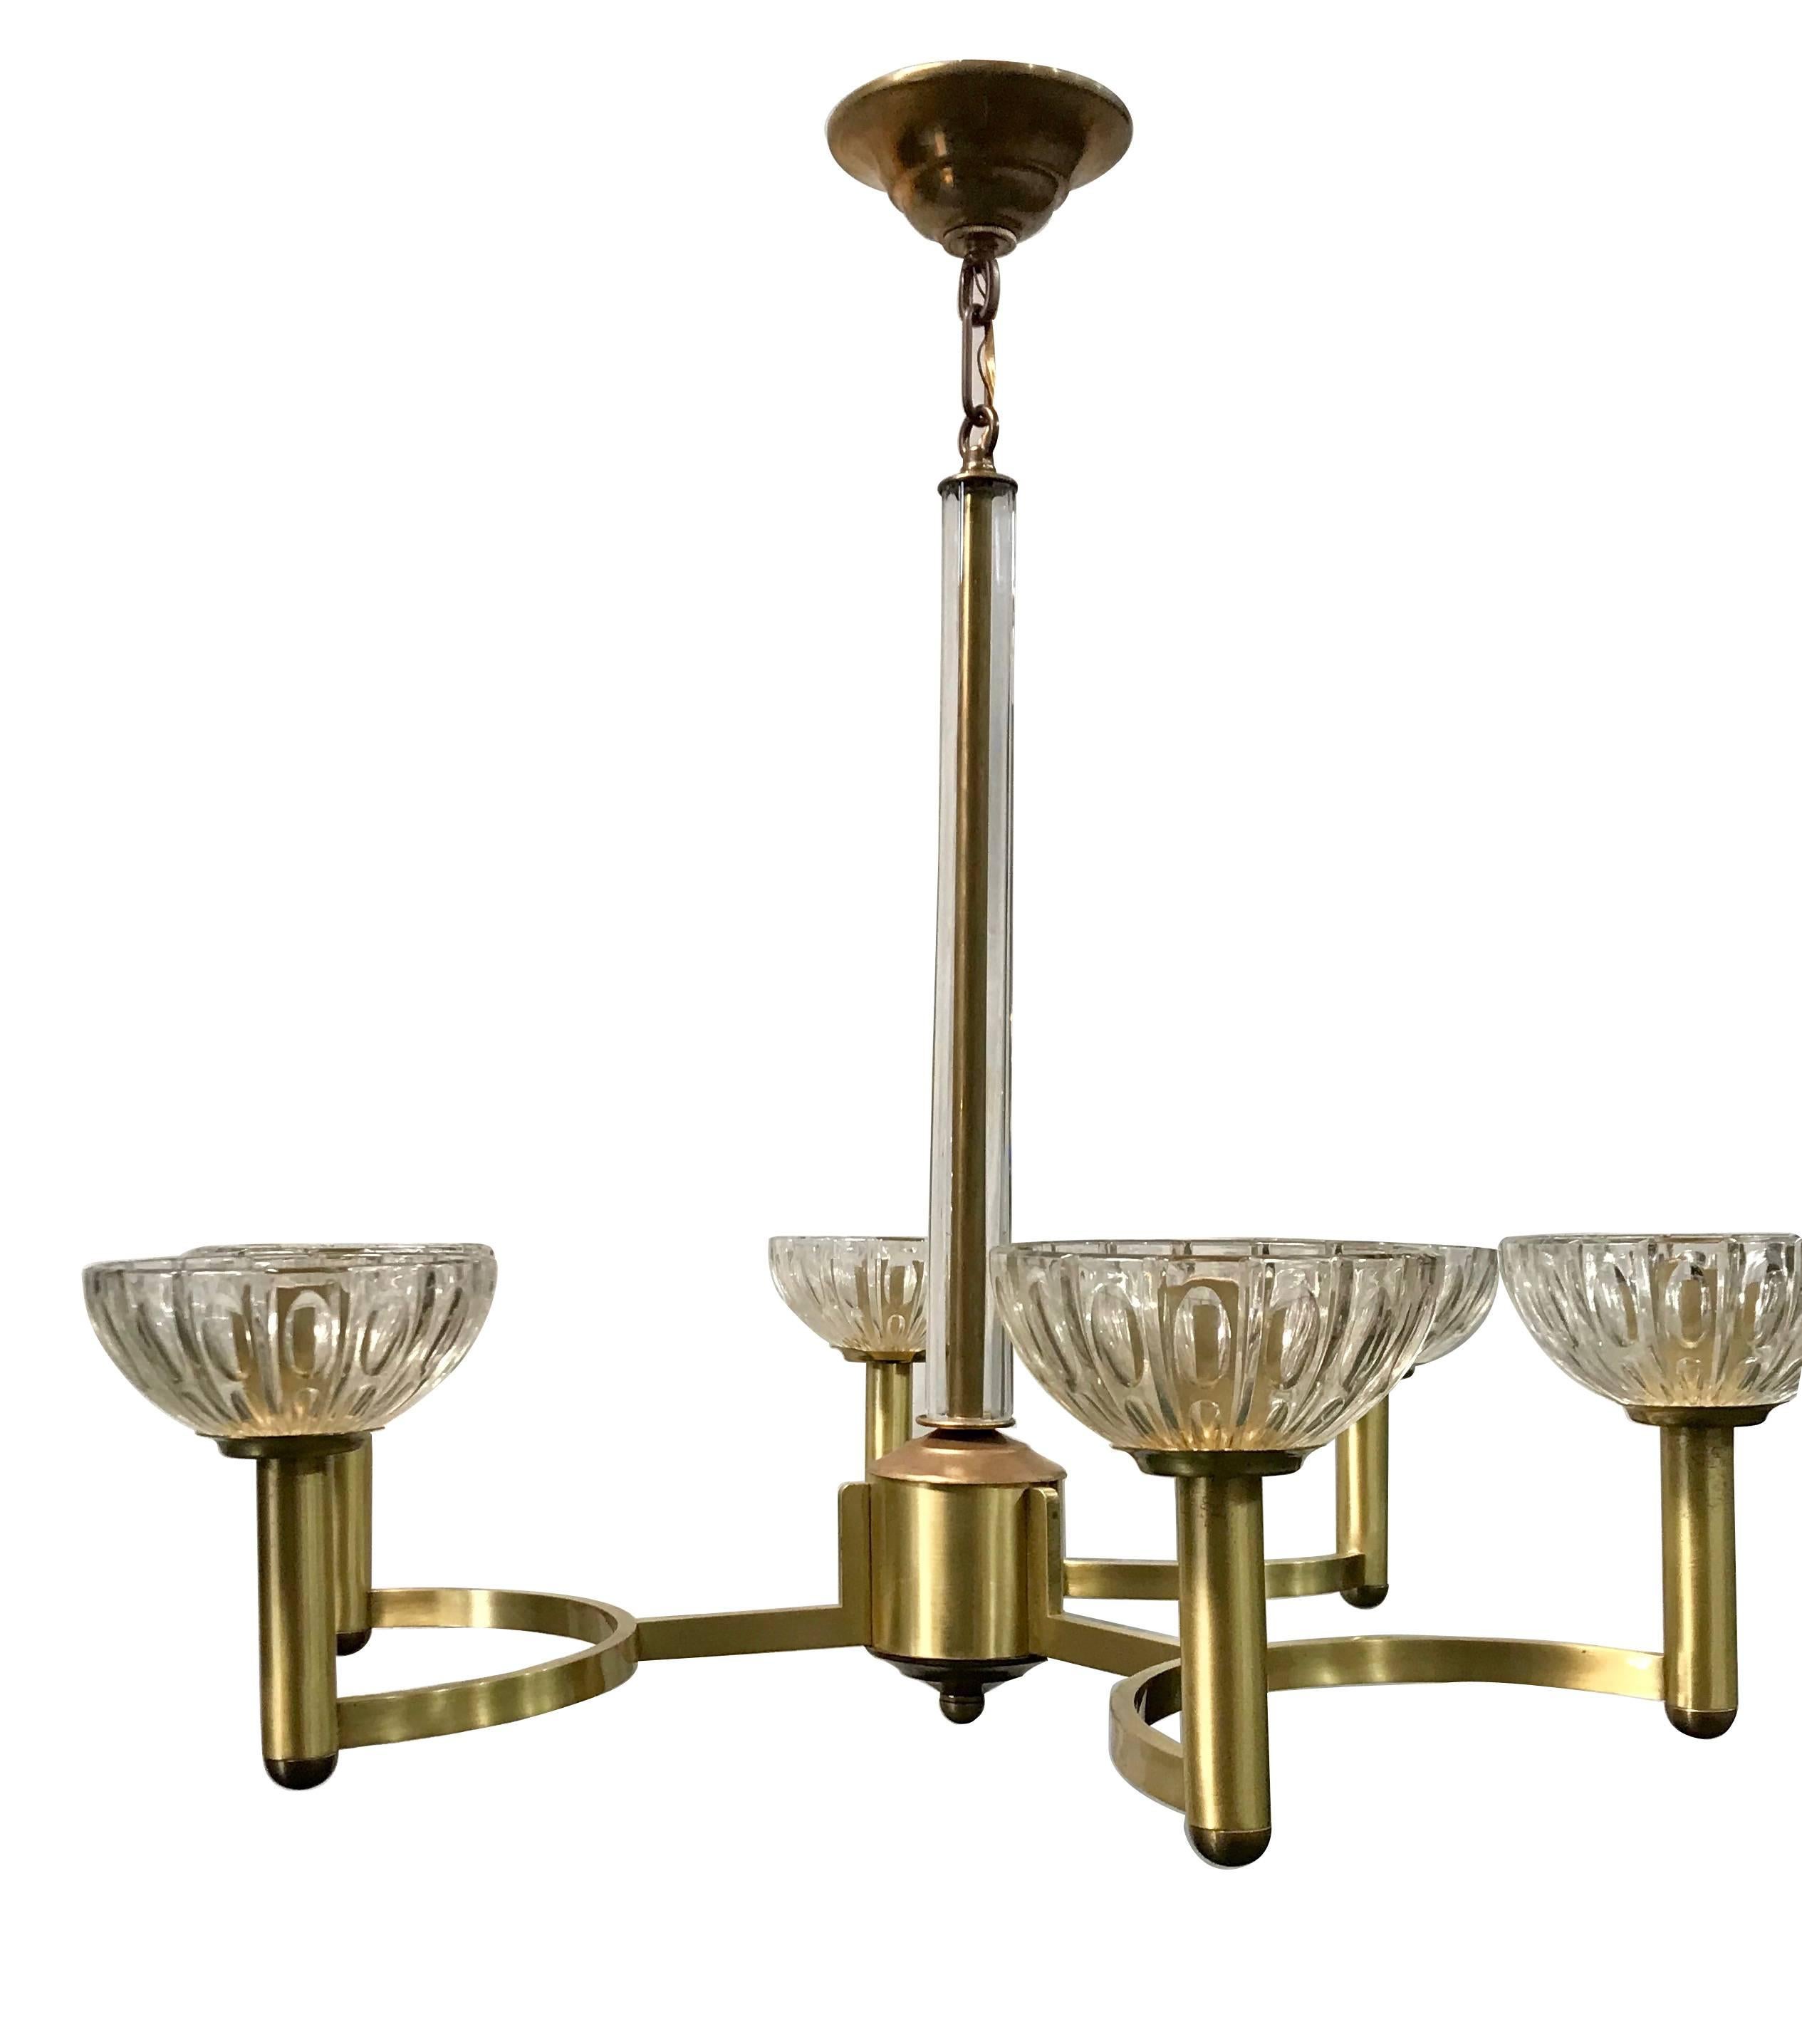 Italian brass chandelier with glass globes, circa 1960s.